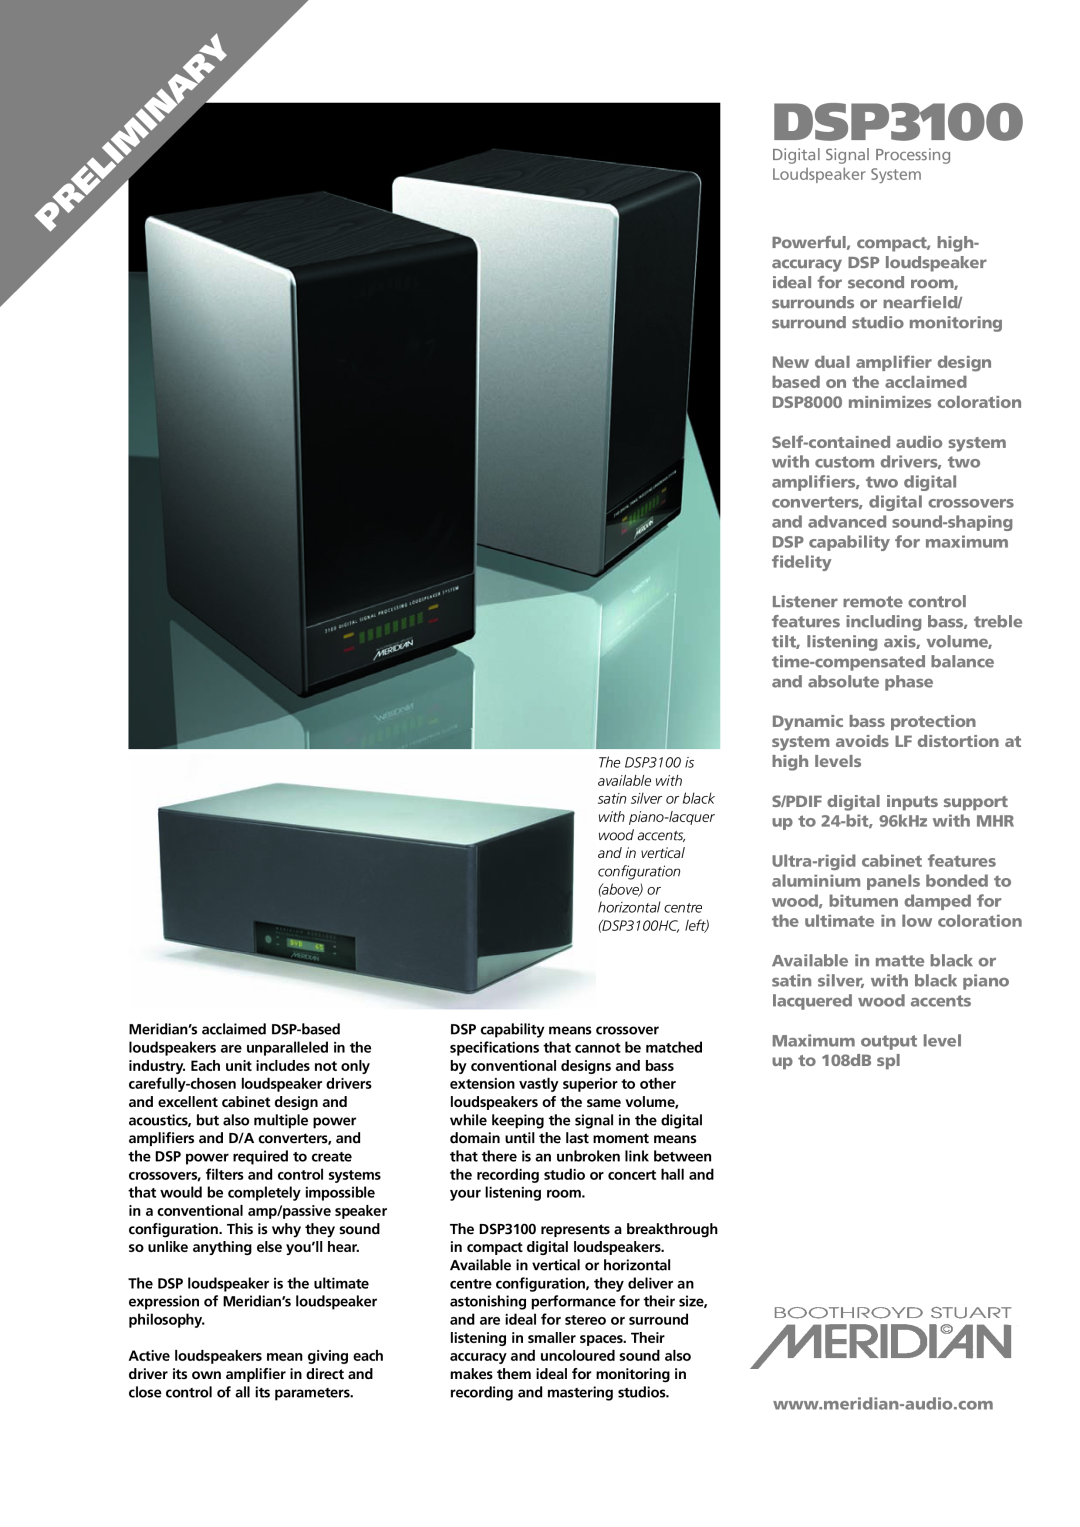 Meridian America dsp3100 specifications DSP3100, Digital Signal Processing Loudspeaker System 